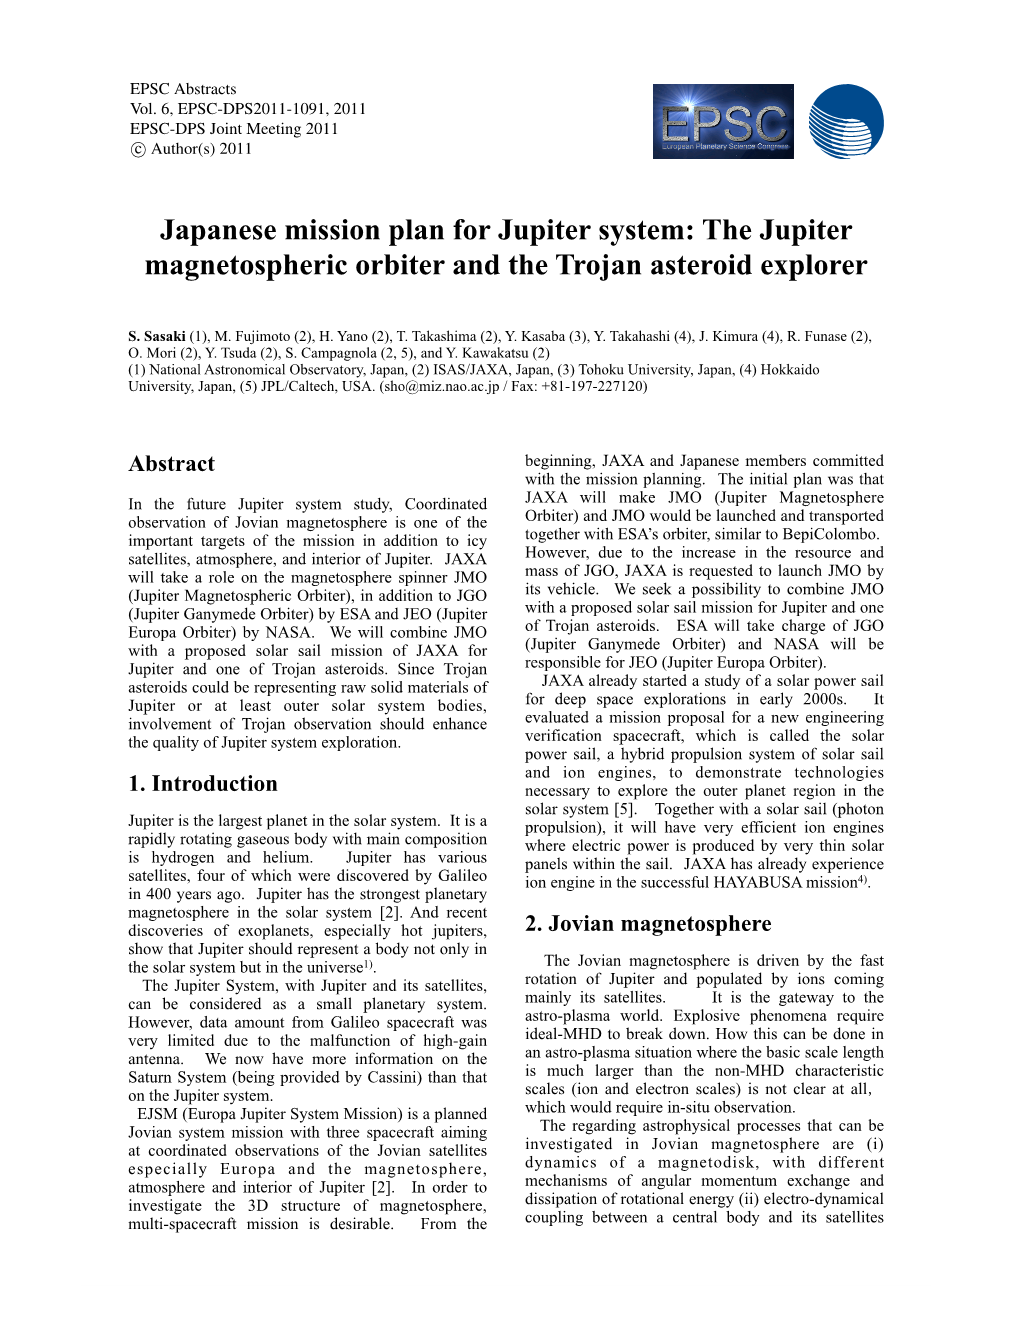 Japanese Mission Plan for Jupiter System: the Jupiter Magnetospheric Orbiter and the Trojan Asteroid Explorer